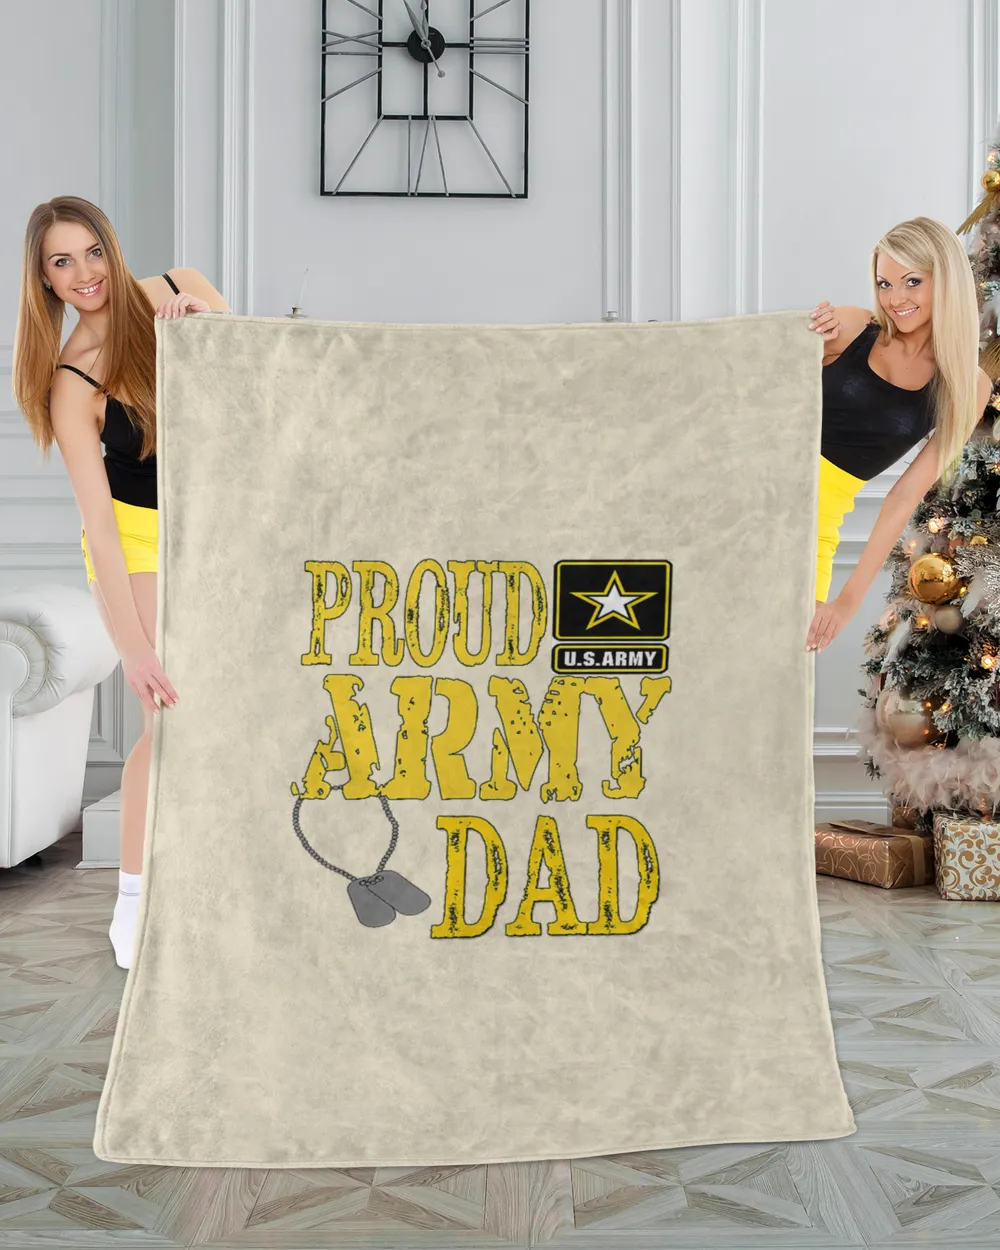 Mens Proud Army Dad Military Pride T-Shirt